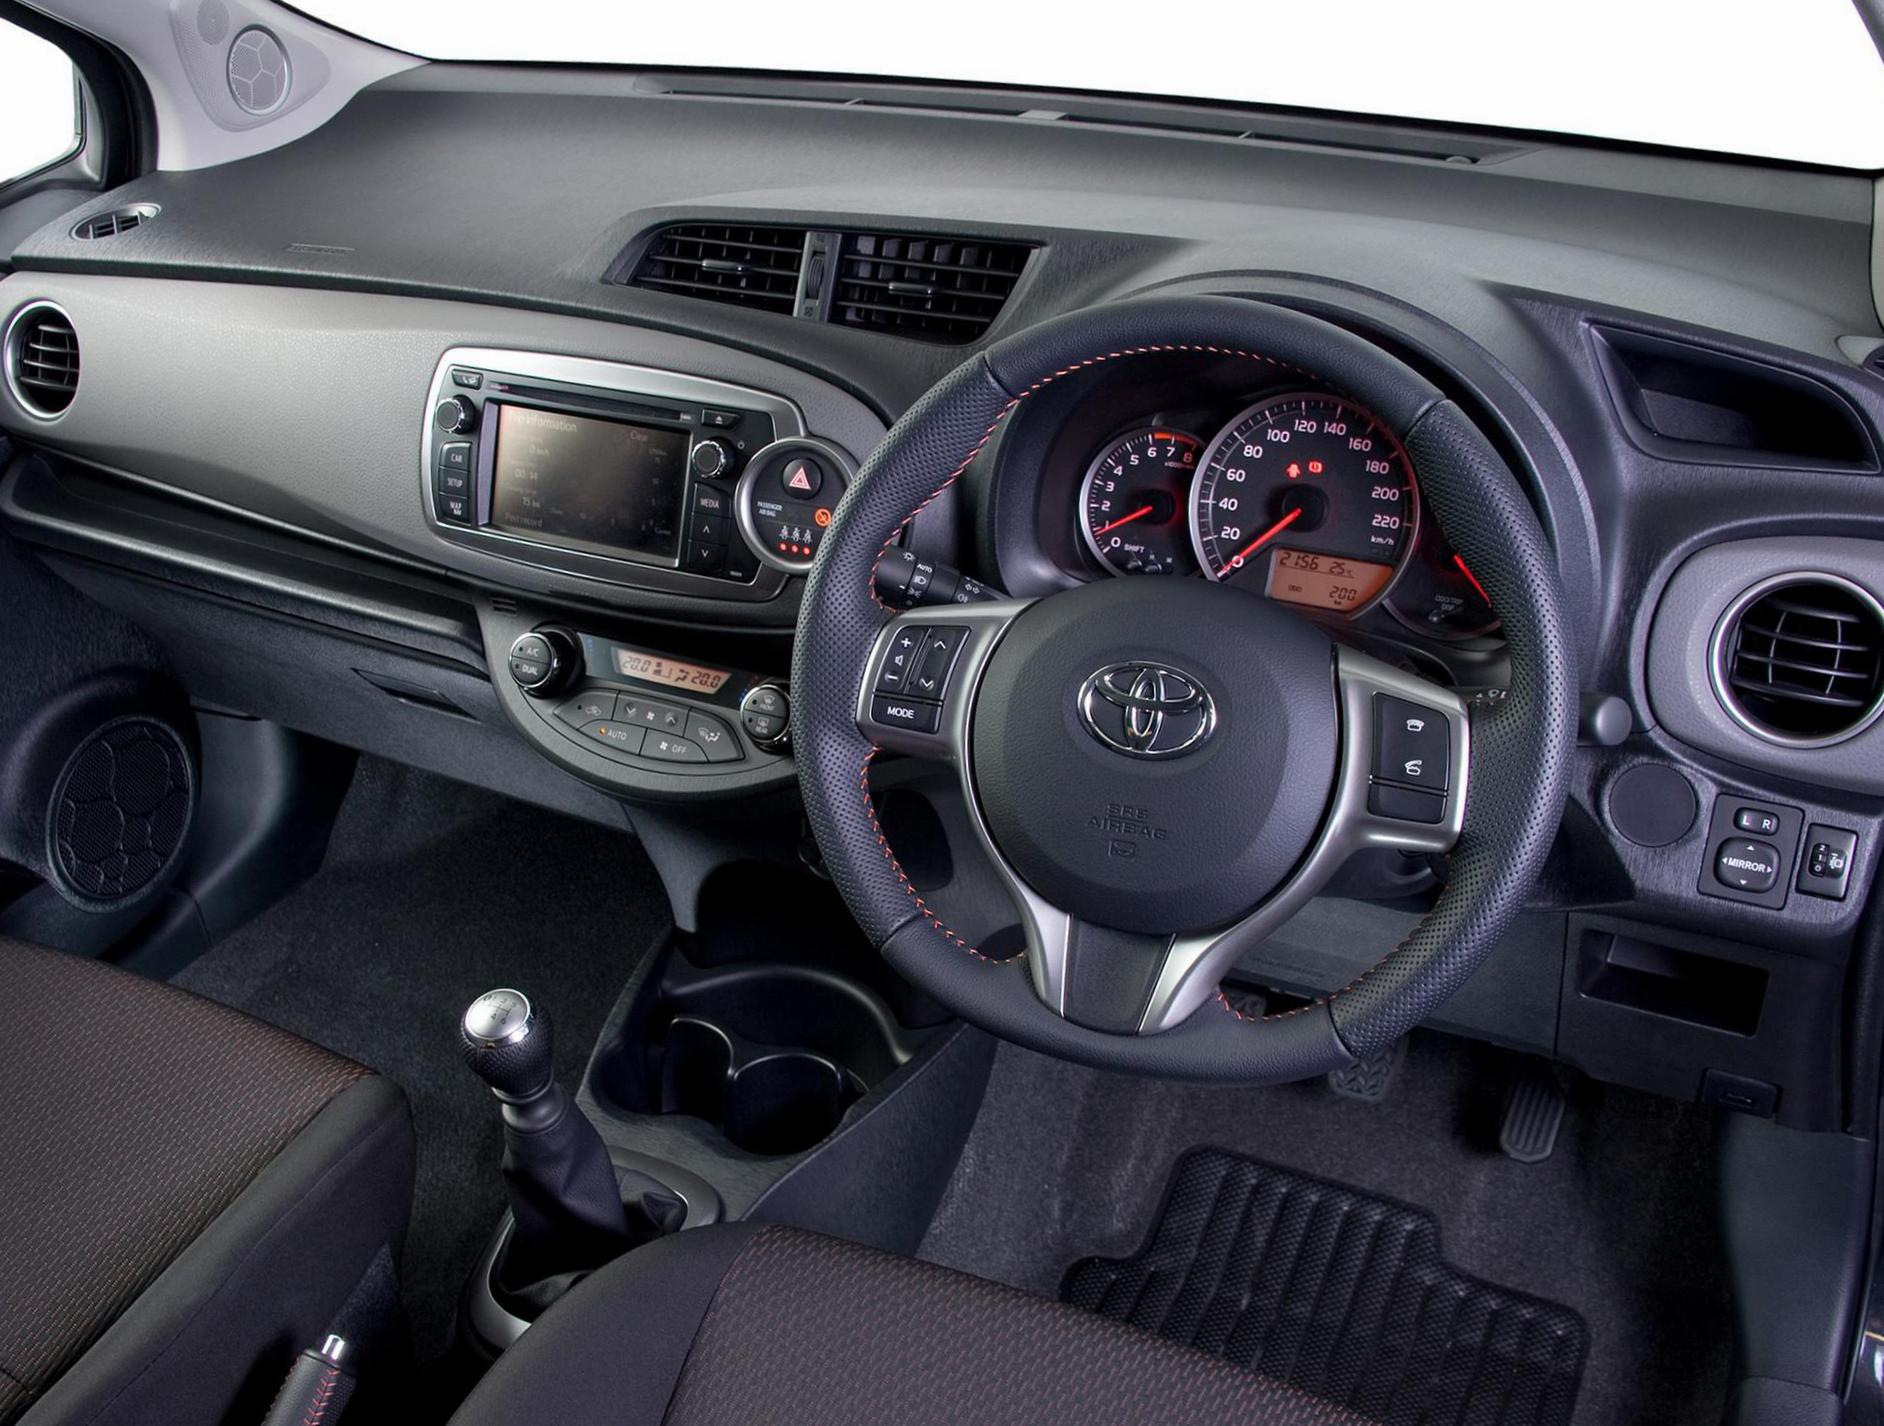 Toyota Yaris 3 doors used 2011